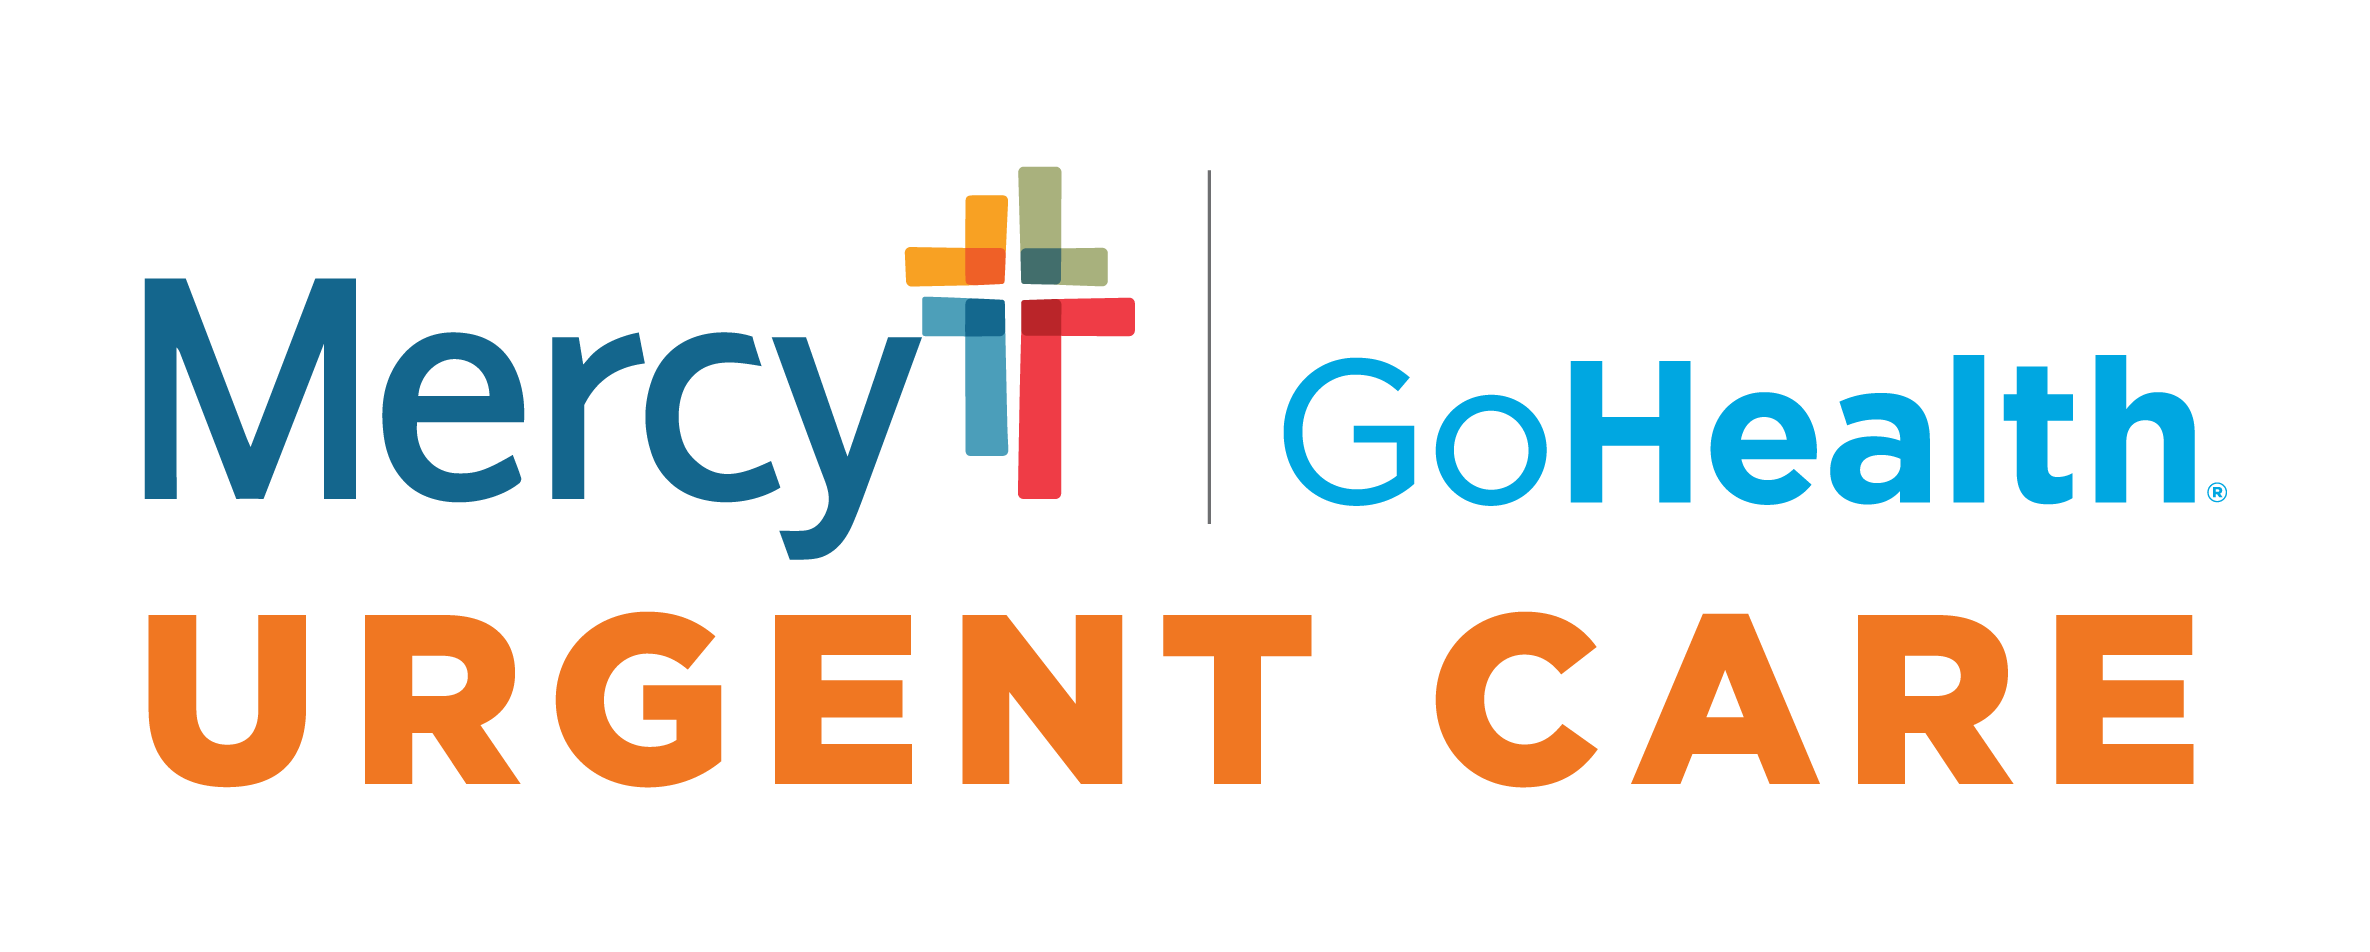 Mercy- GoHealth Urgent Care - Missouri Virtual Logo